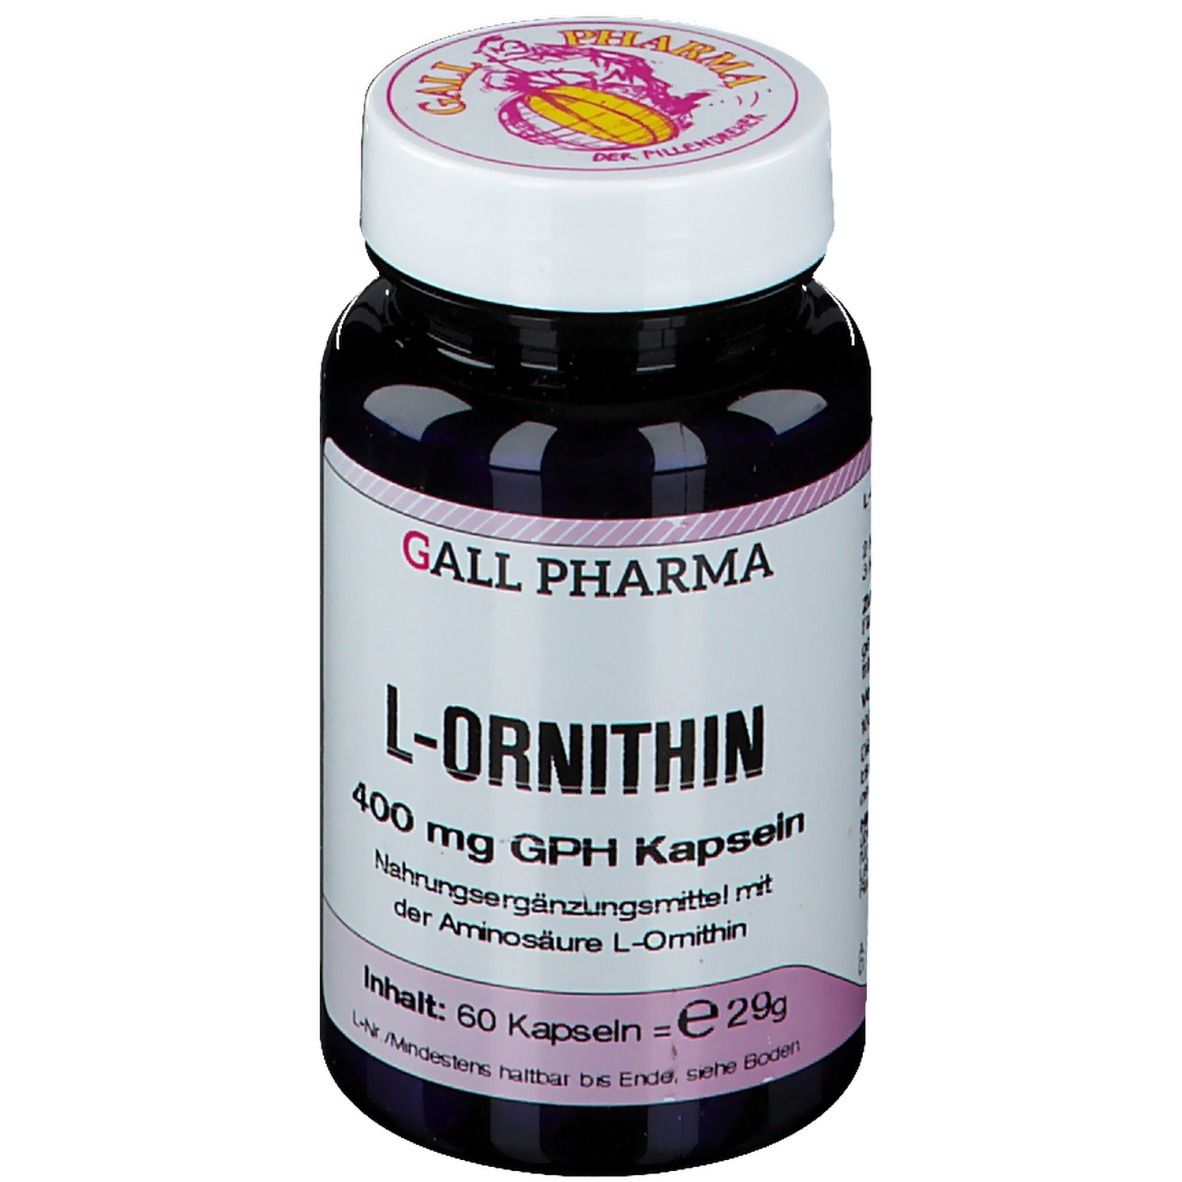 GALL PHARMA L-Ornithin 400 mg GPH Kapseln